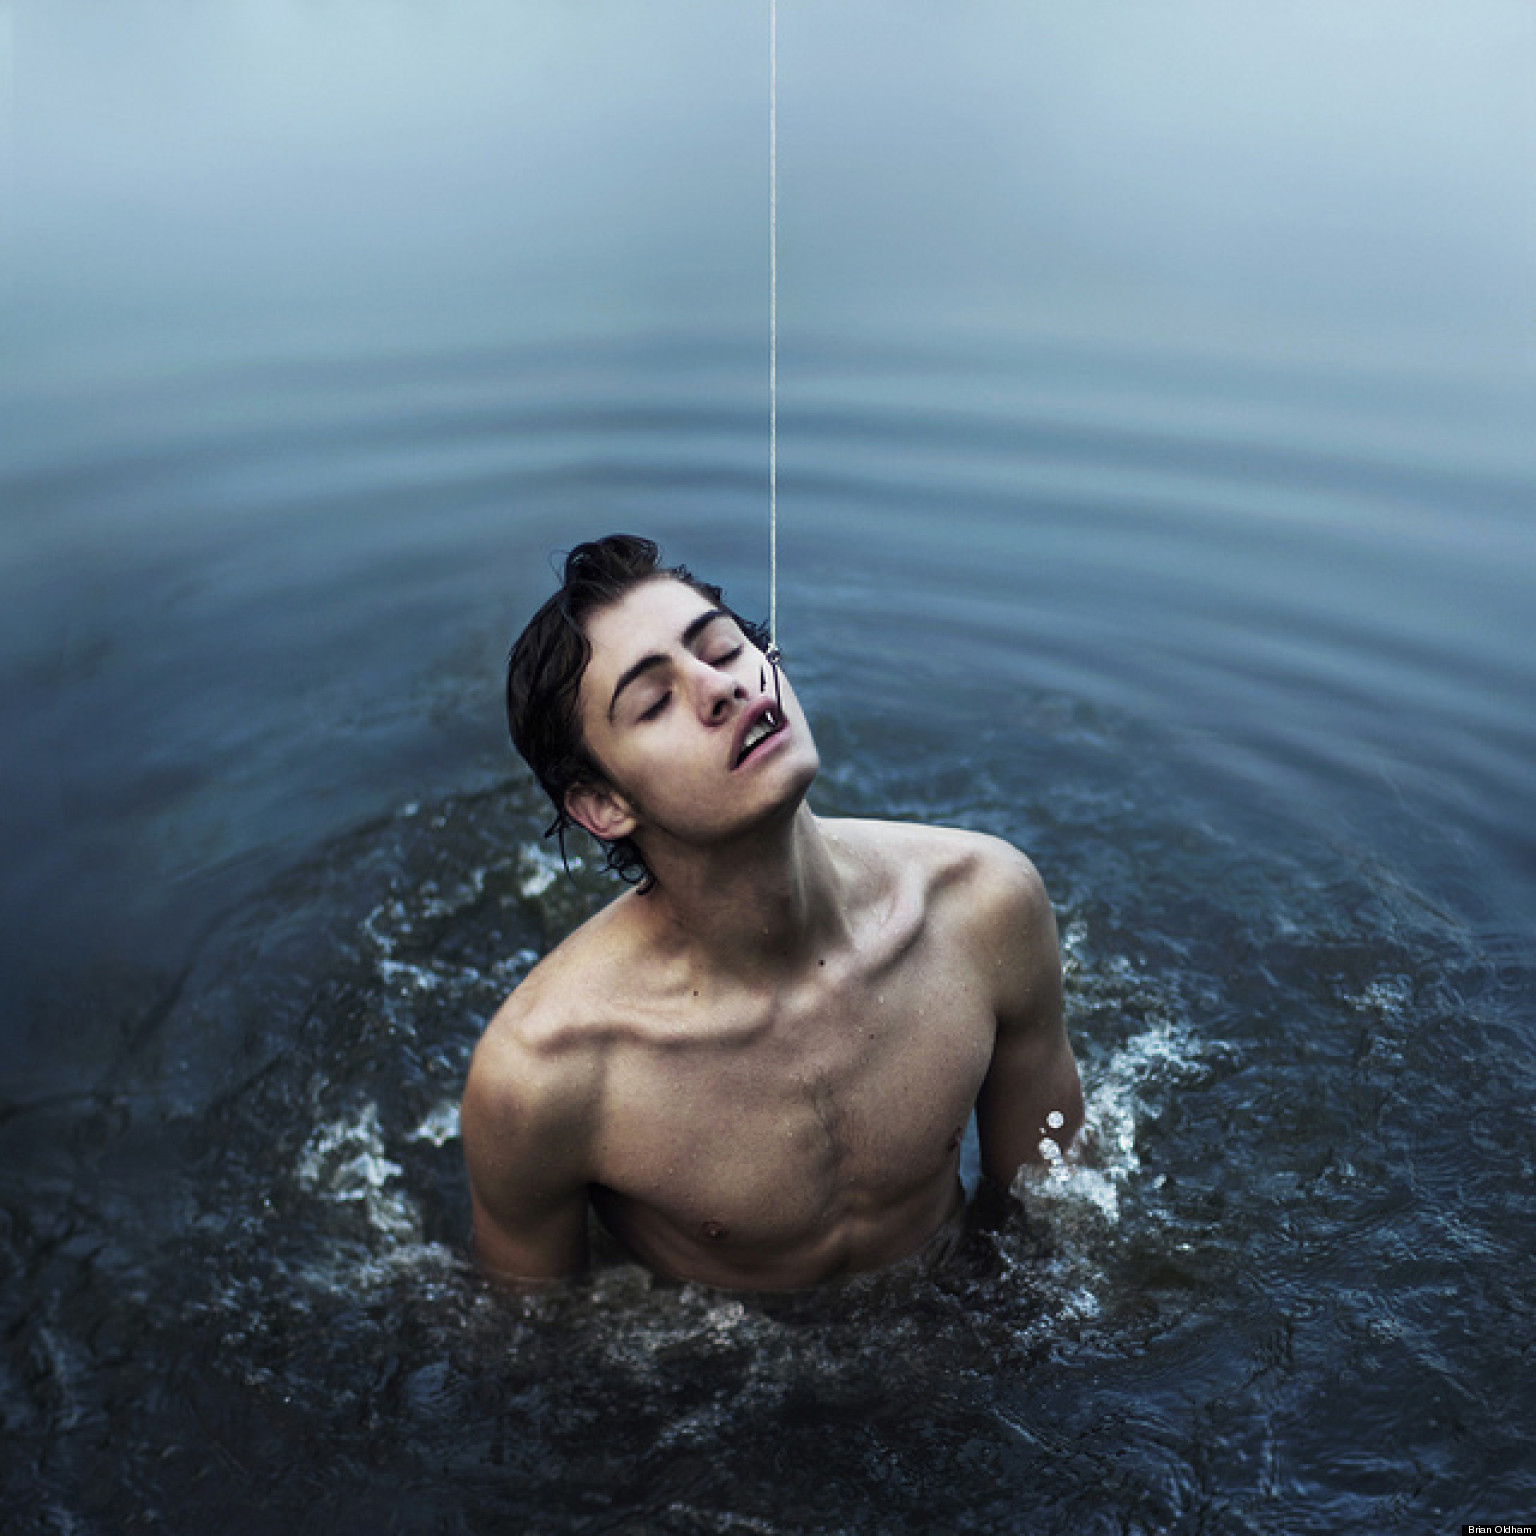 Brian Oldham, 19-Year-Old Photographer, Creates Dream-Like Portraits